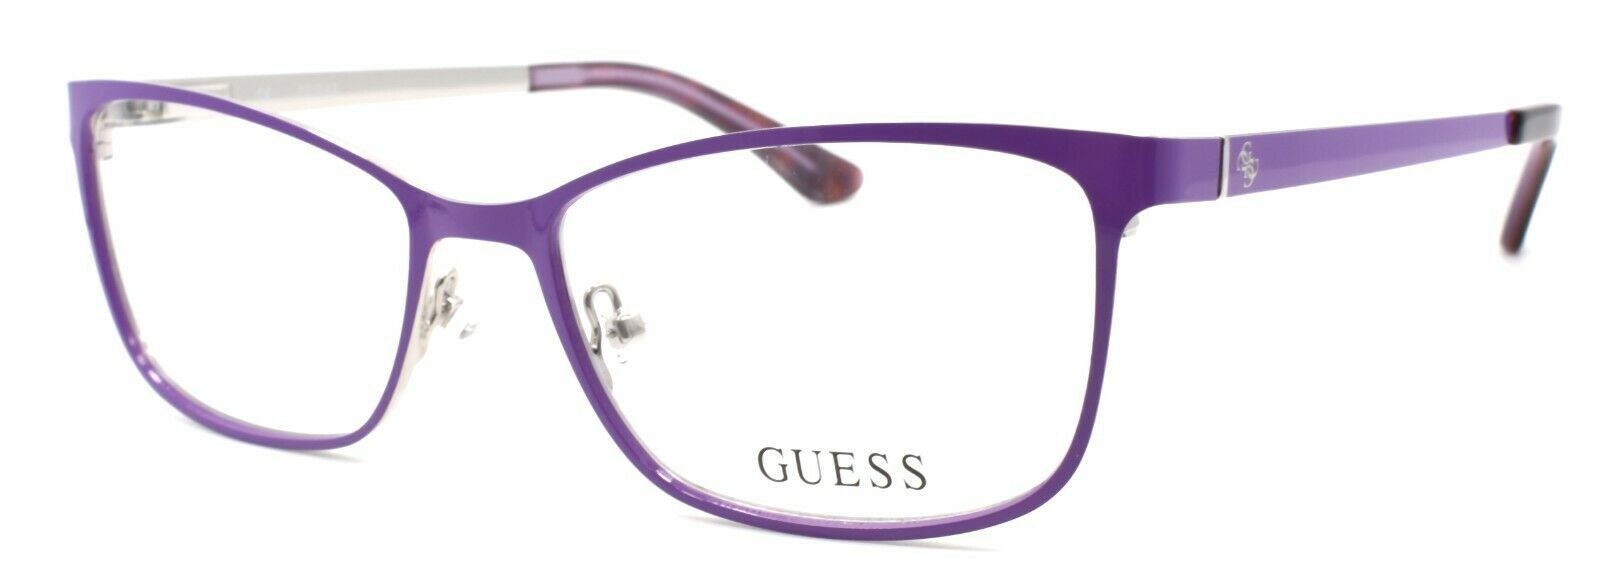 1-GUESS GU2516 078 Women's Eyeglasses Frames 53-17-135 Shiny Lilac + CASE-664689713868-IKSpecs